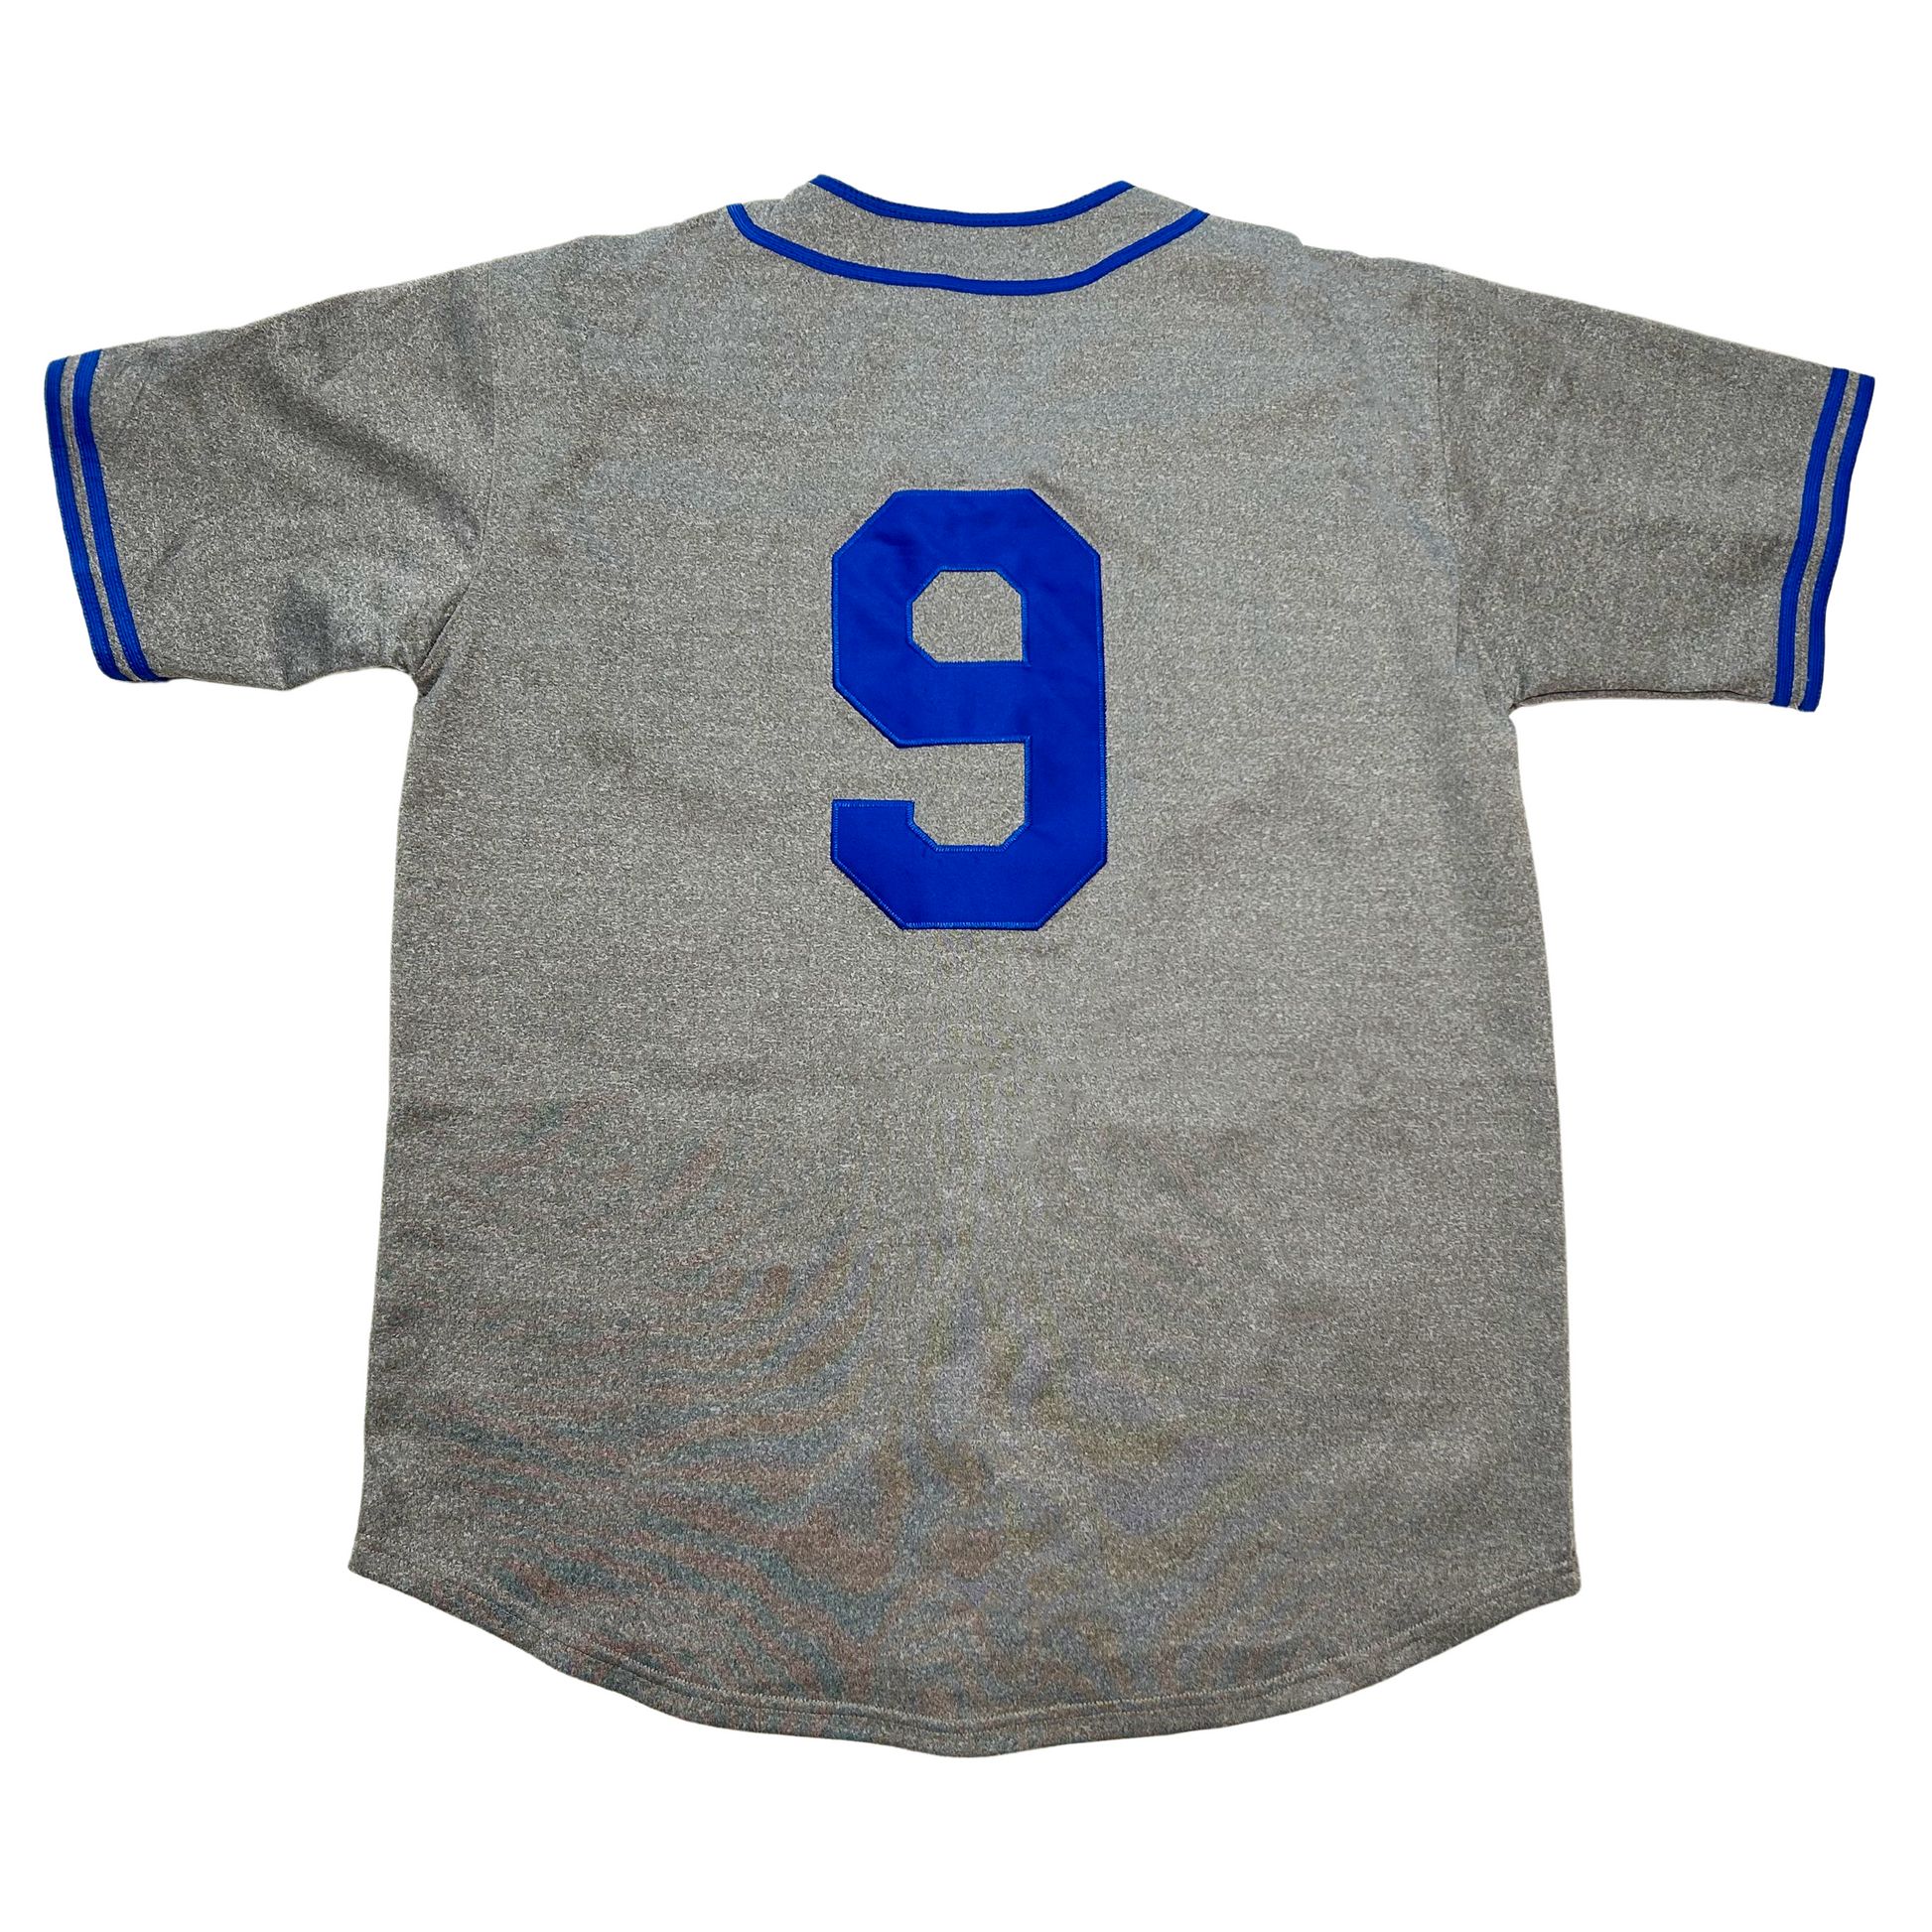 Montreal Royals Jackie Robinson Vintage Baseball Jersey Youth Small